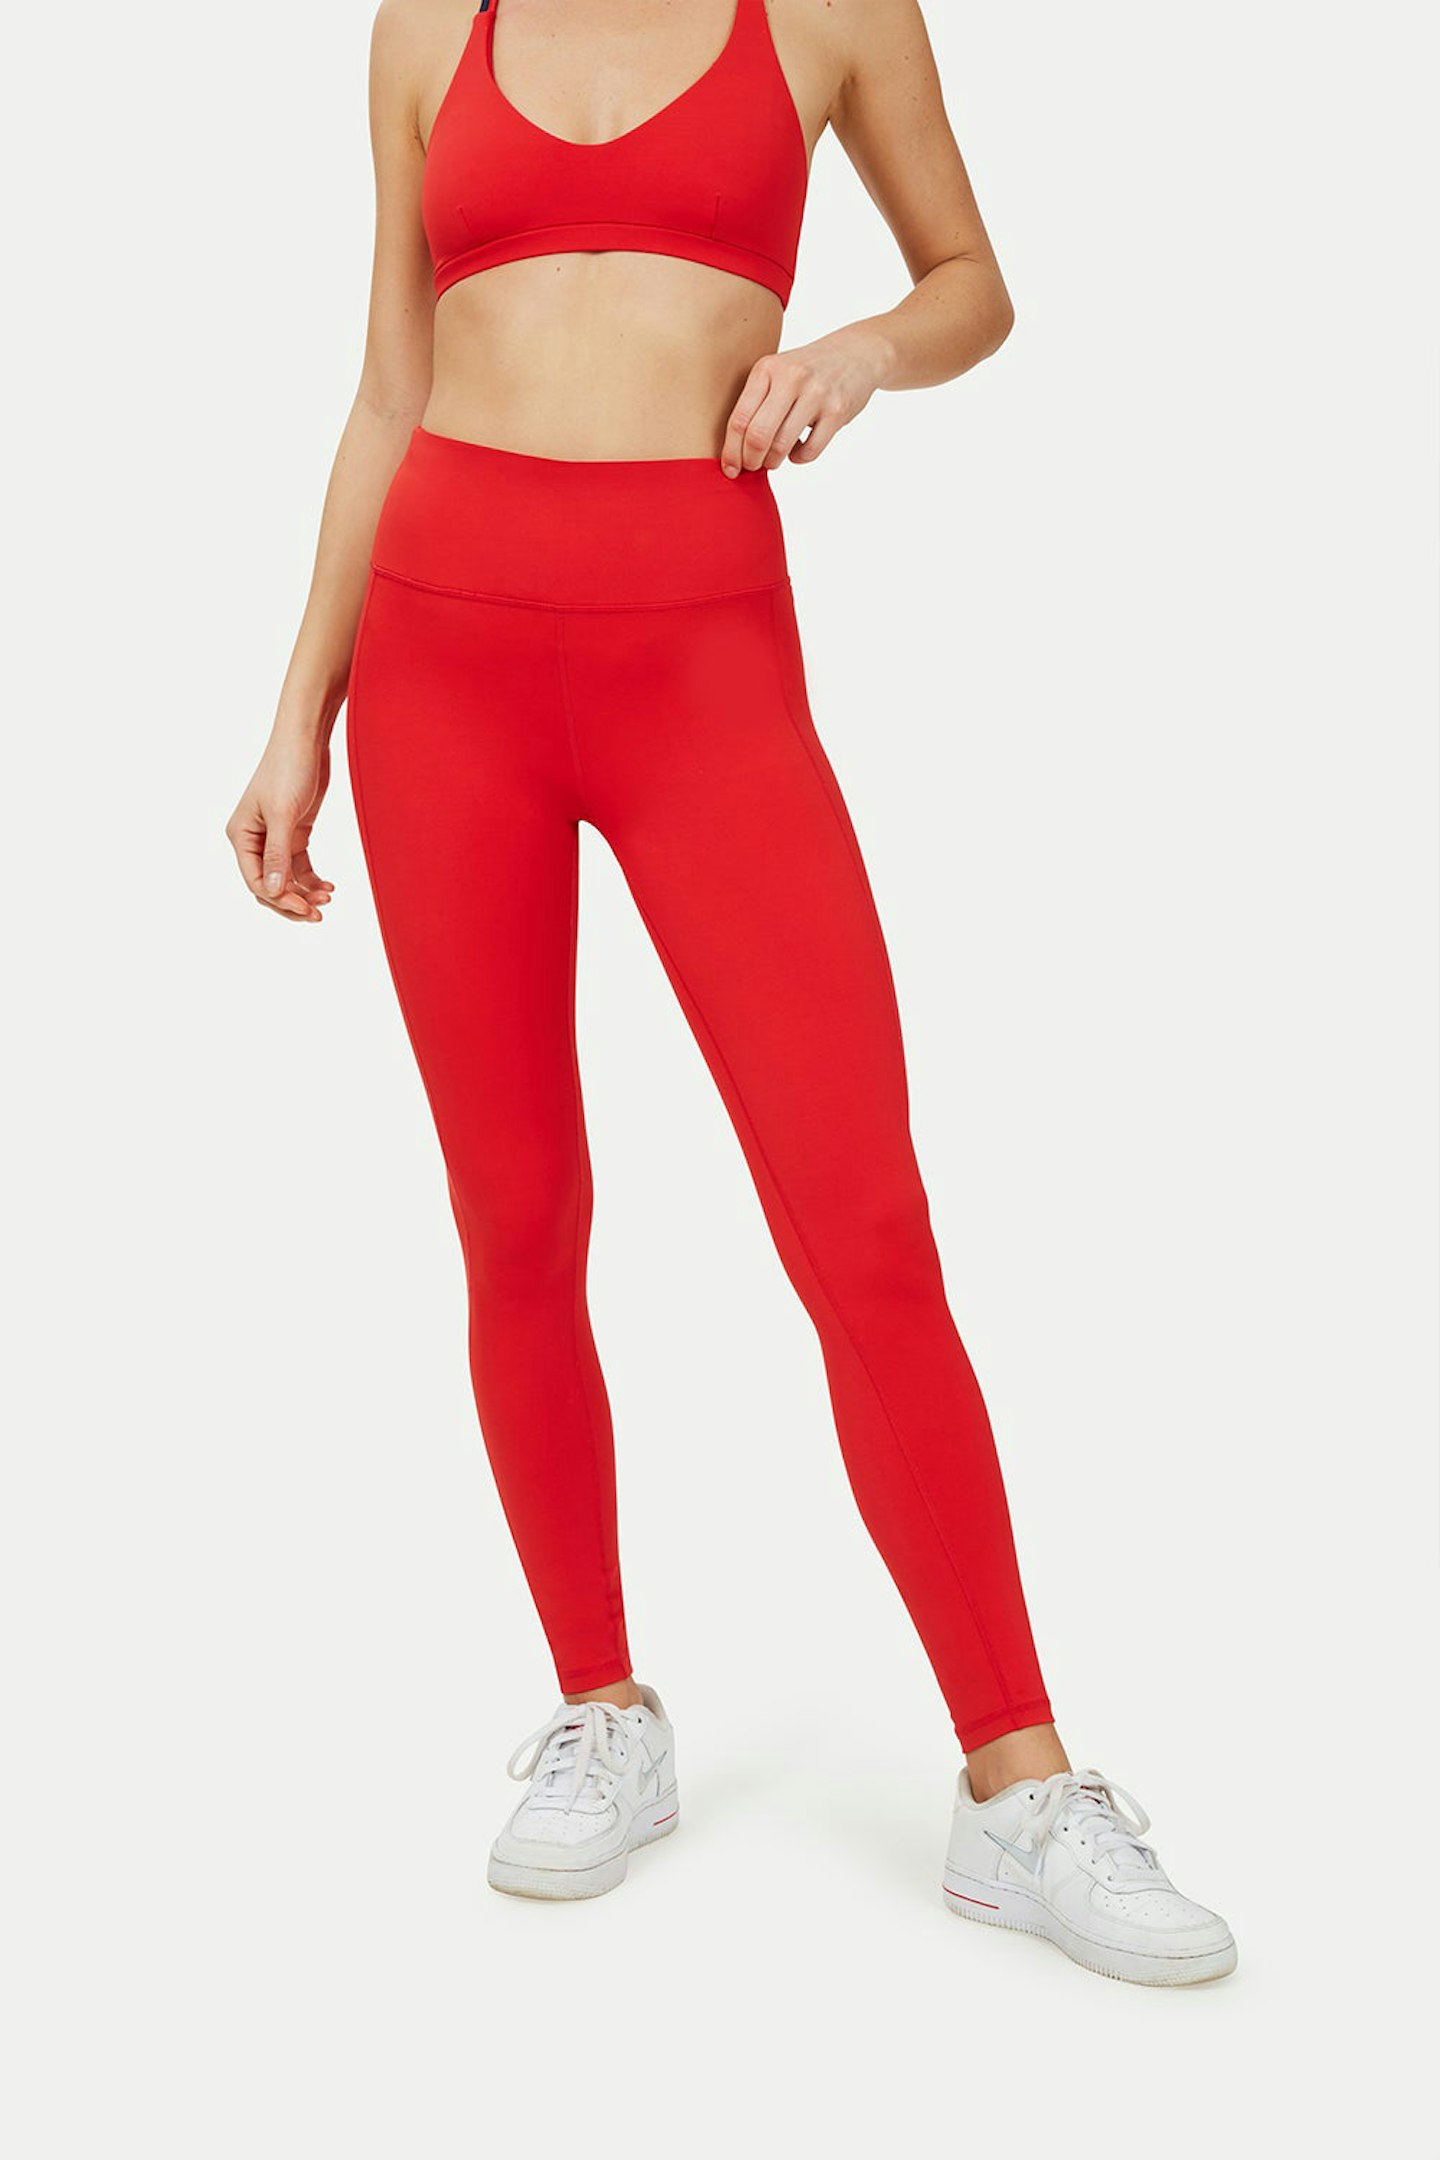 Best workout leggings women Pocket Sport, Claude Legging Red, WAS £55 NOW £48